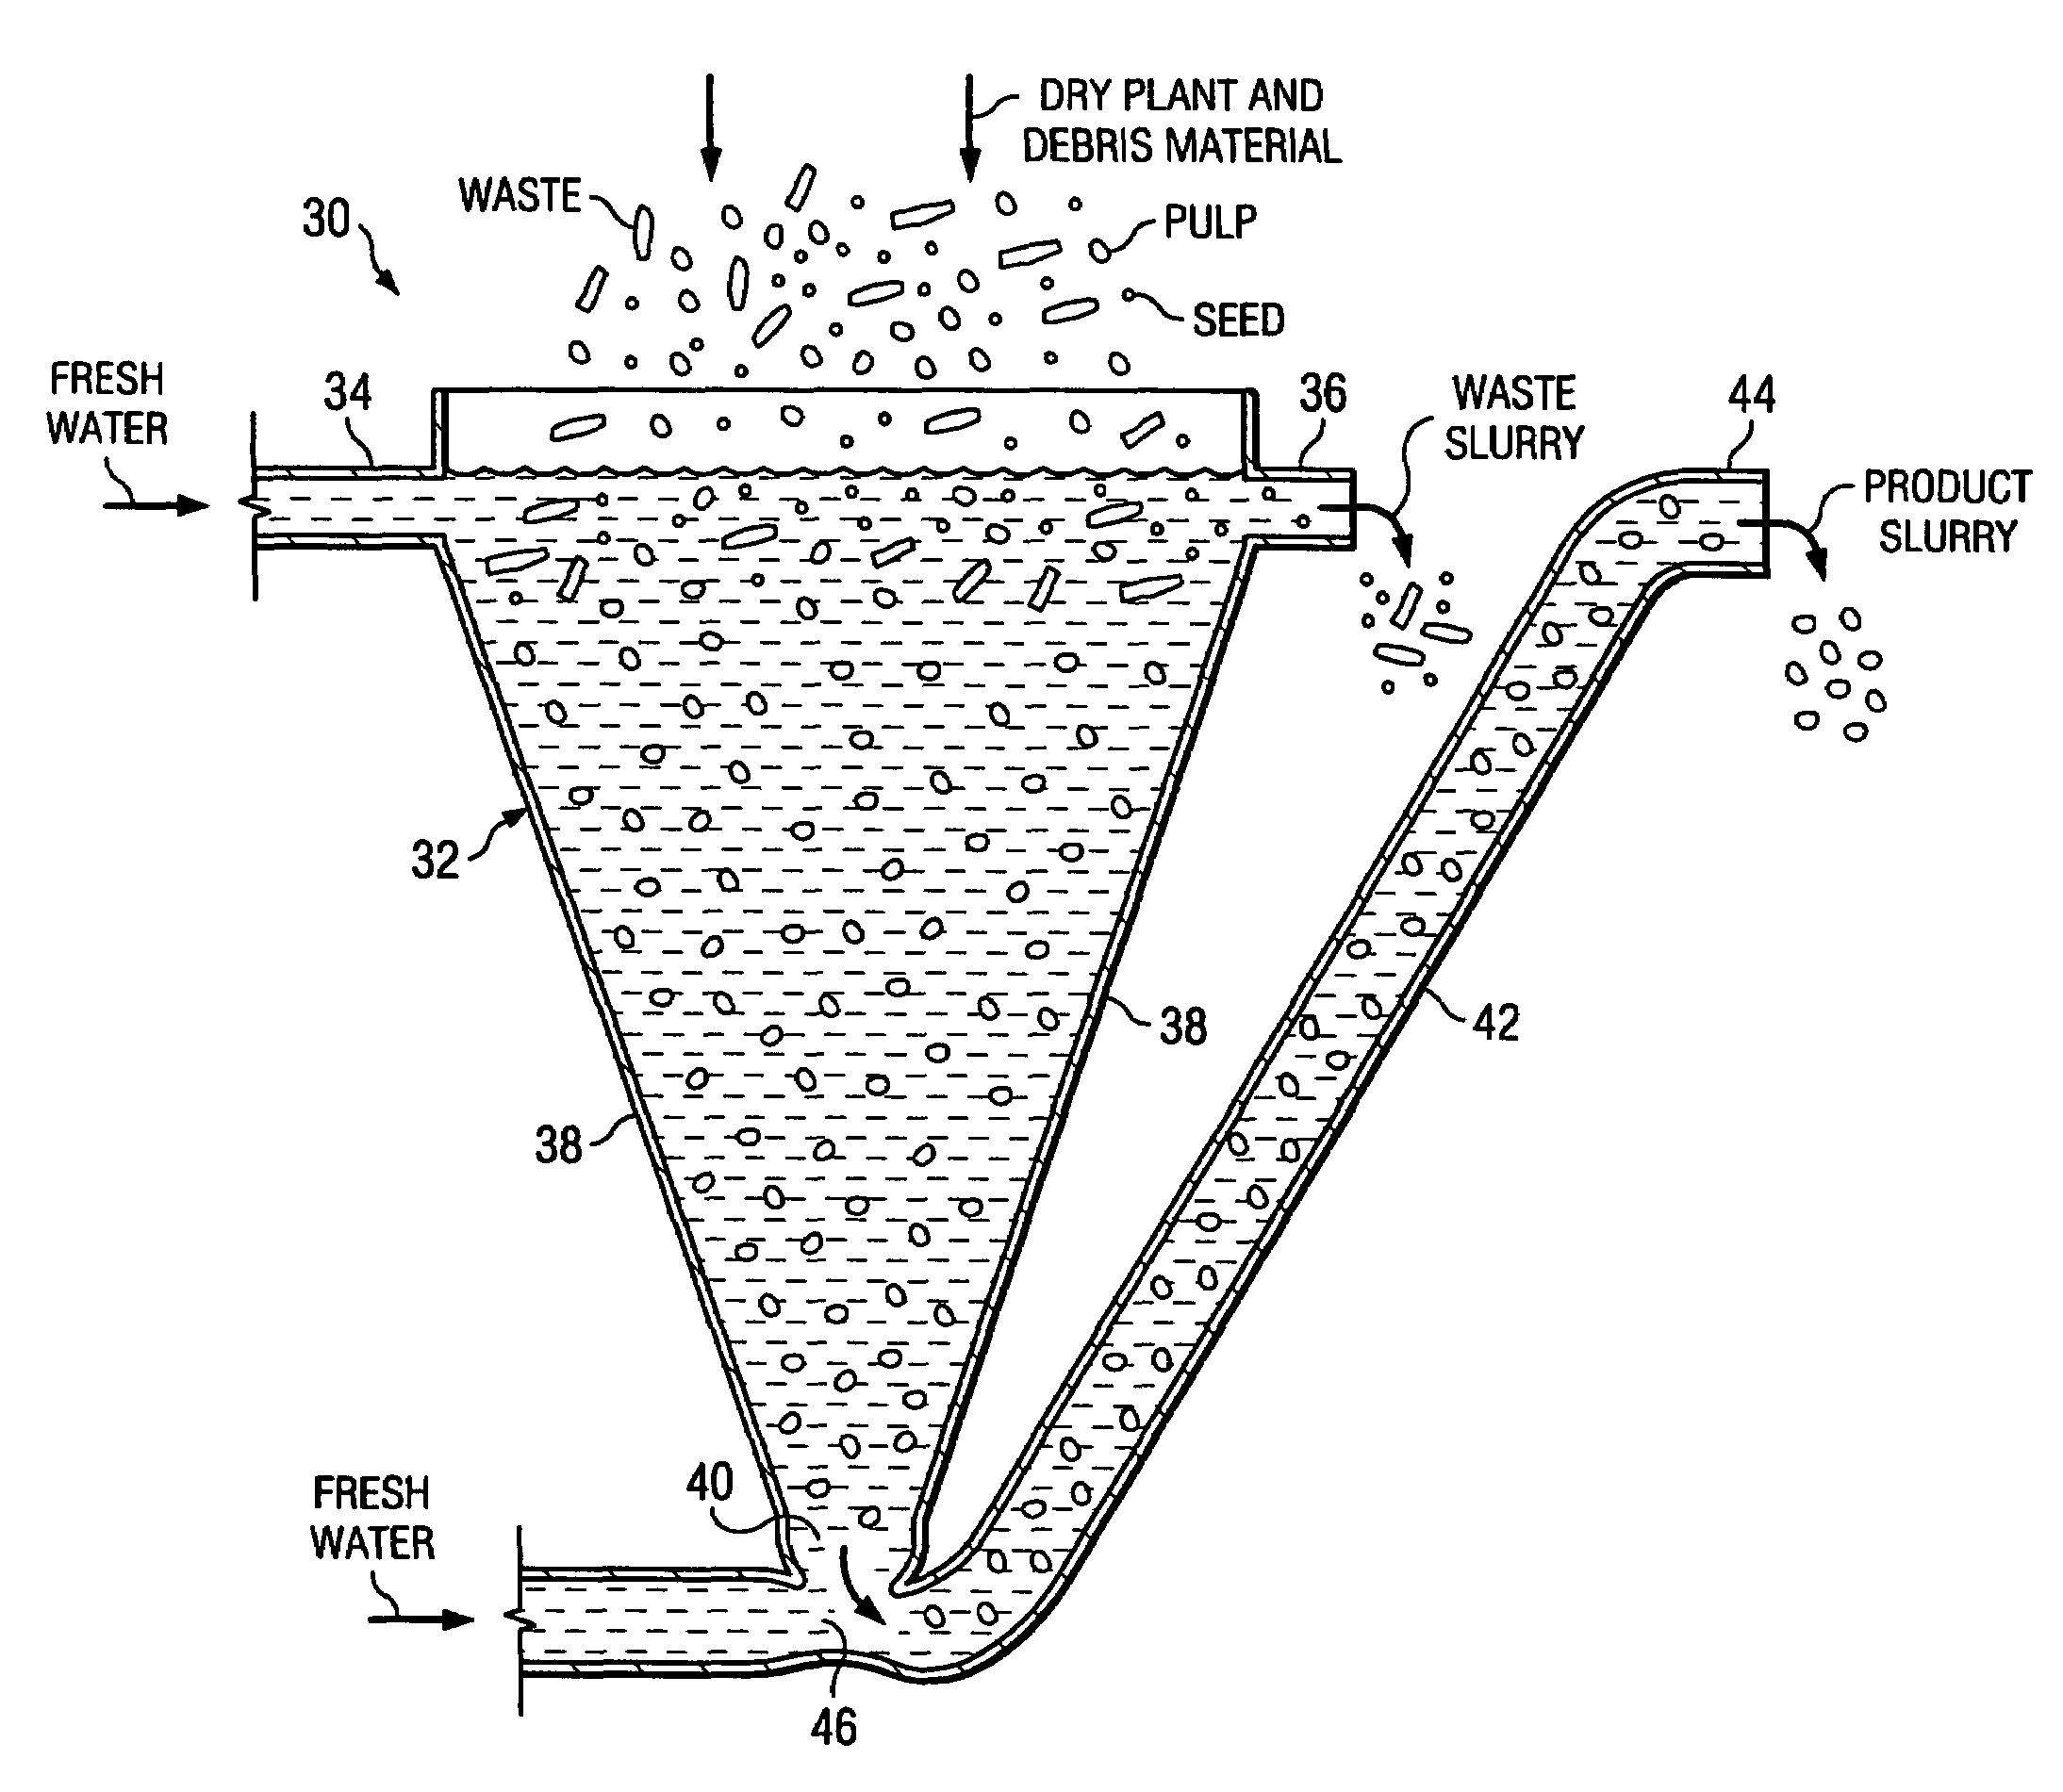 Venturi-driven flotation separator for chili peppers